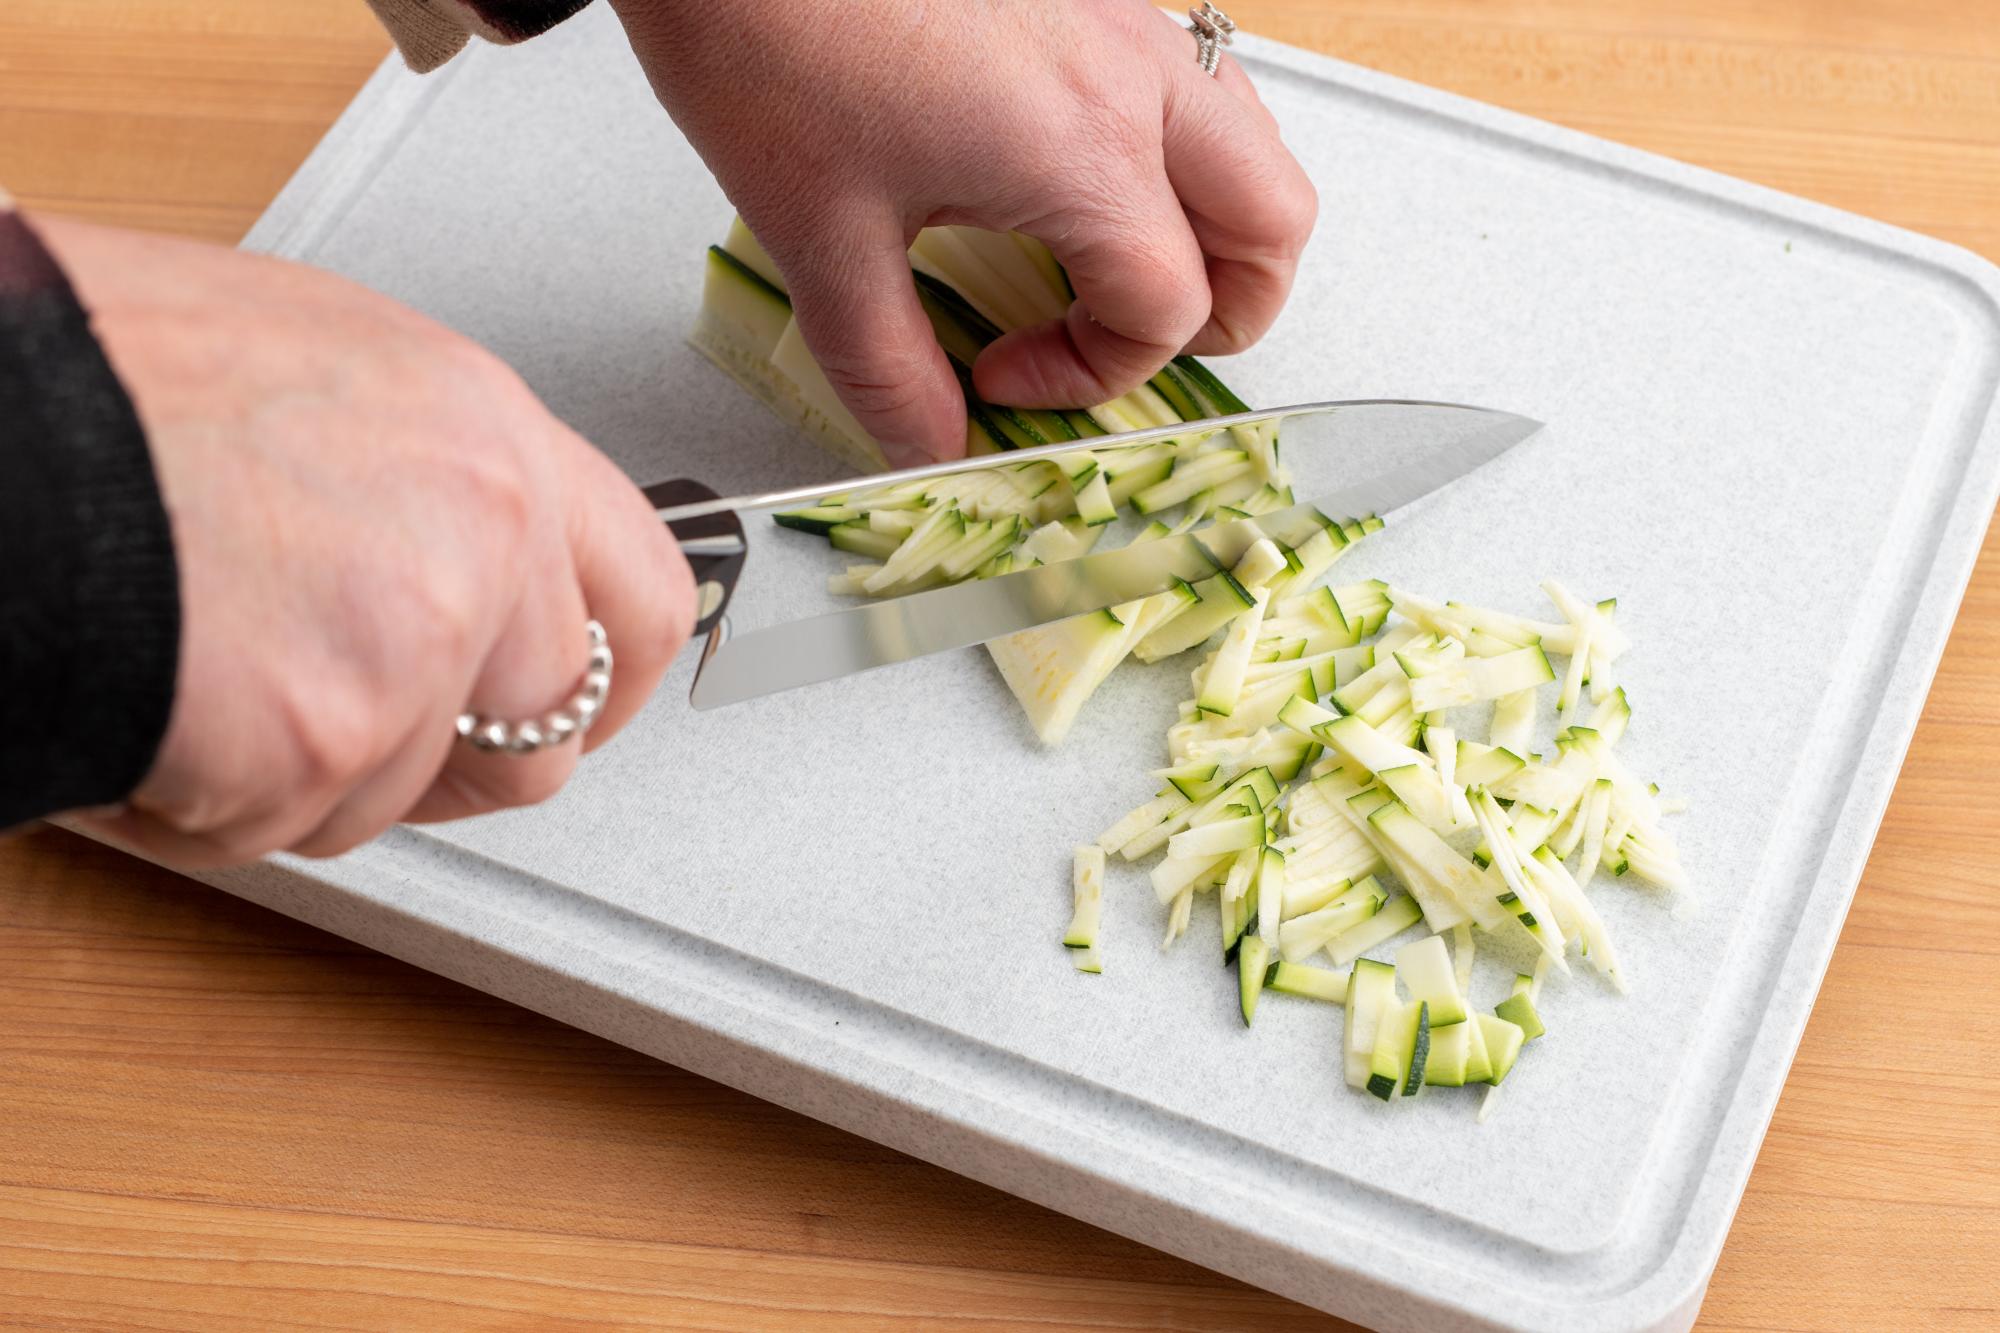 Cutting the zucchini strips, crosswise.